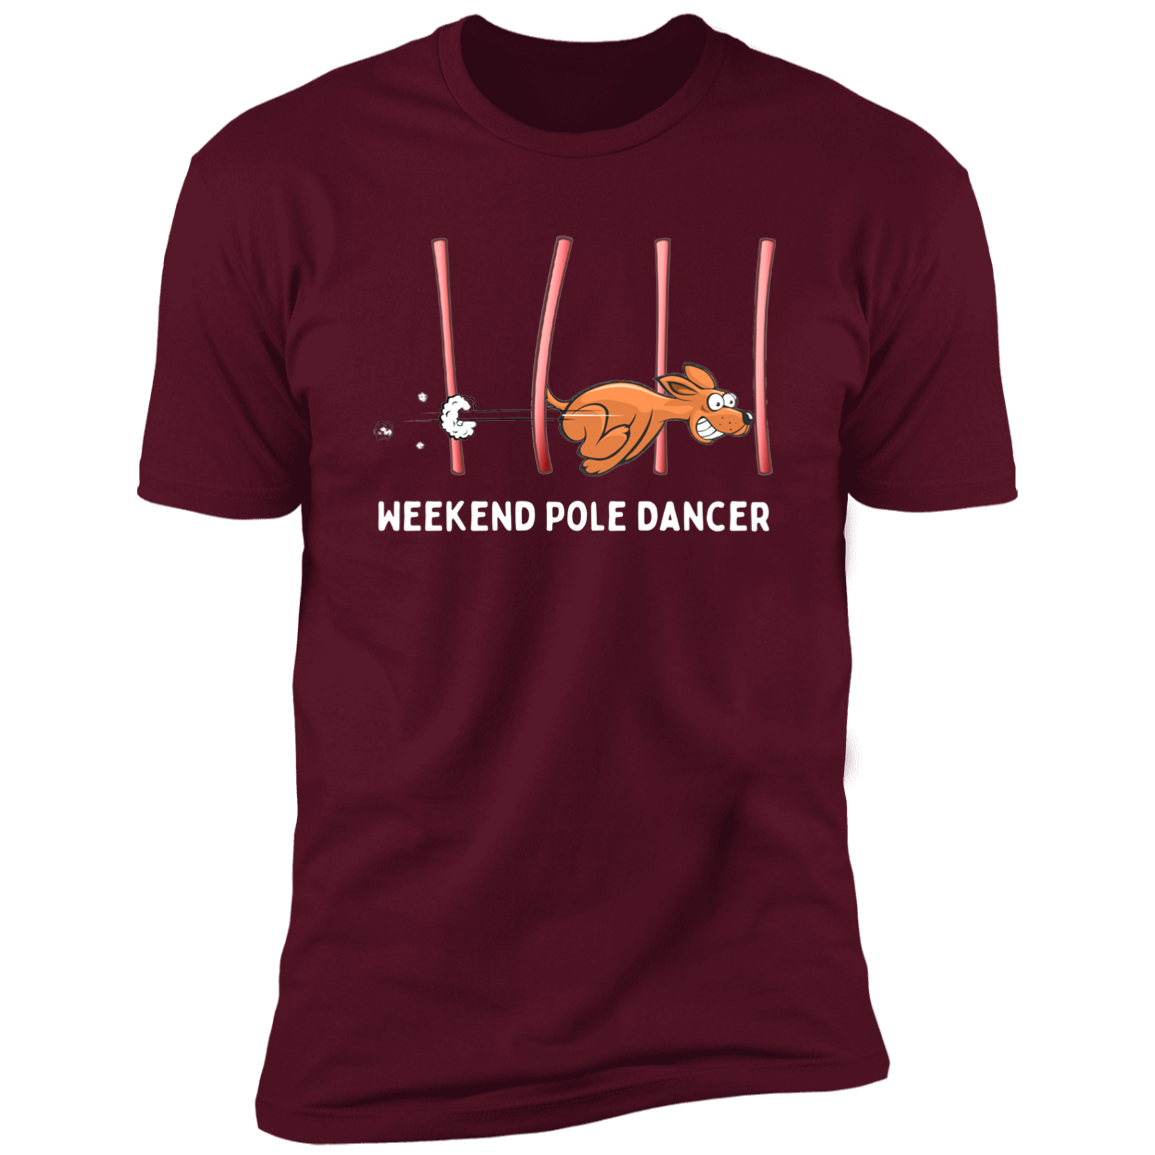 Weekend Pole Dancer Dog Agility T-Shirt, dog shirt for humans, sporting dog shirt, agility dog shirt, in maroon